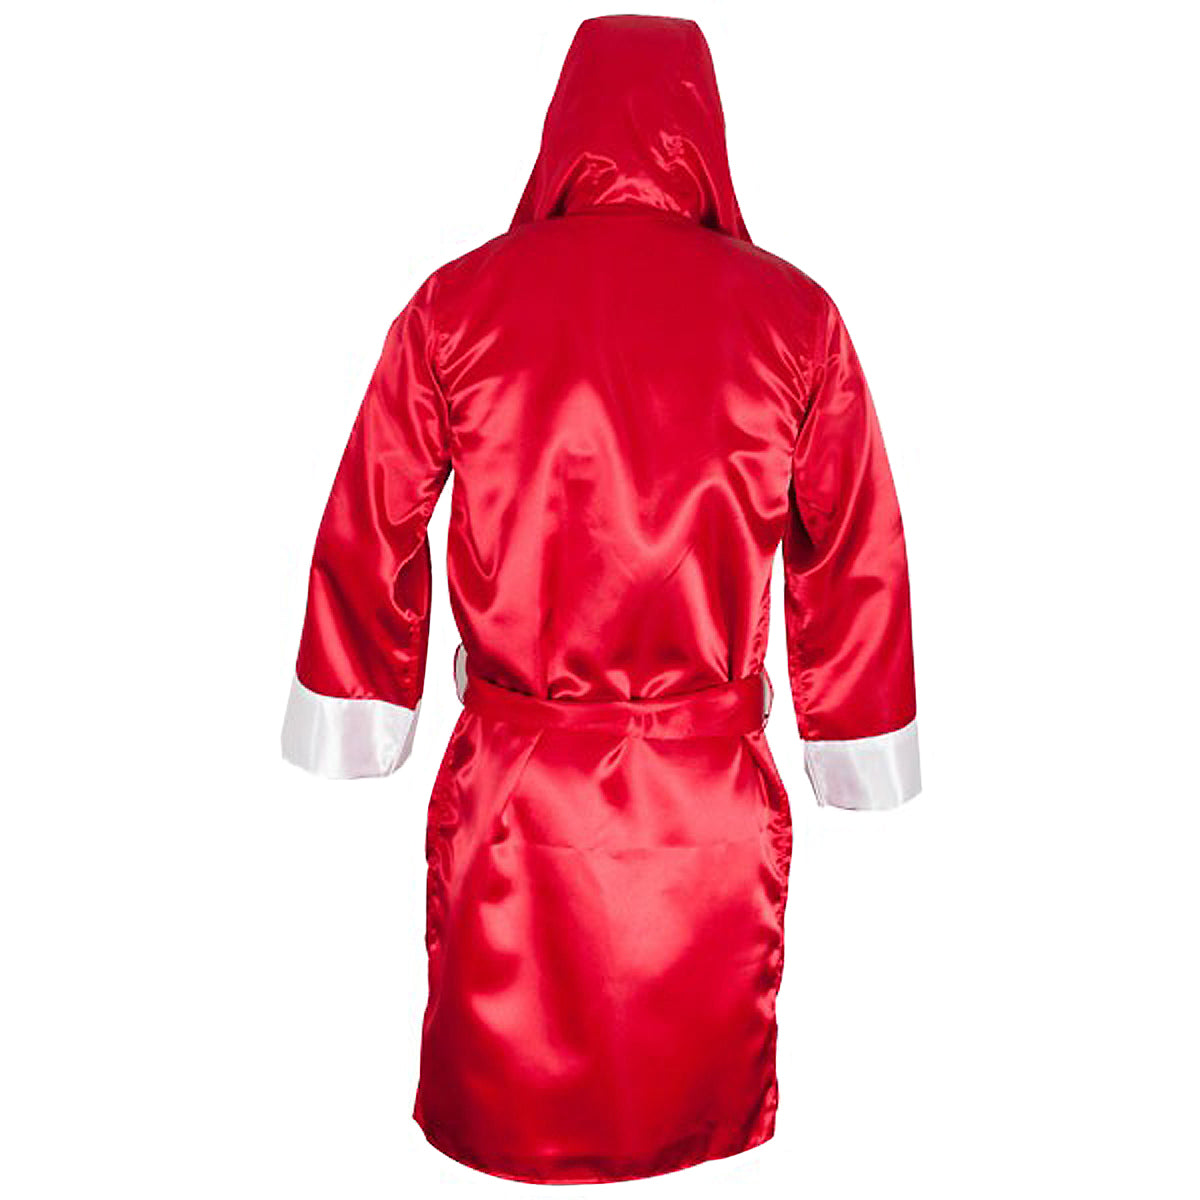 Cleto Reyes Satin Boxing Robe with Hood - Large - Red/White Cleto Reyes